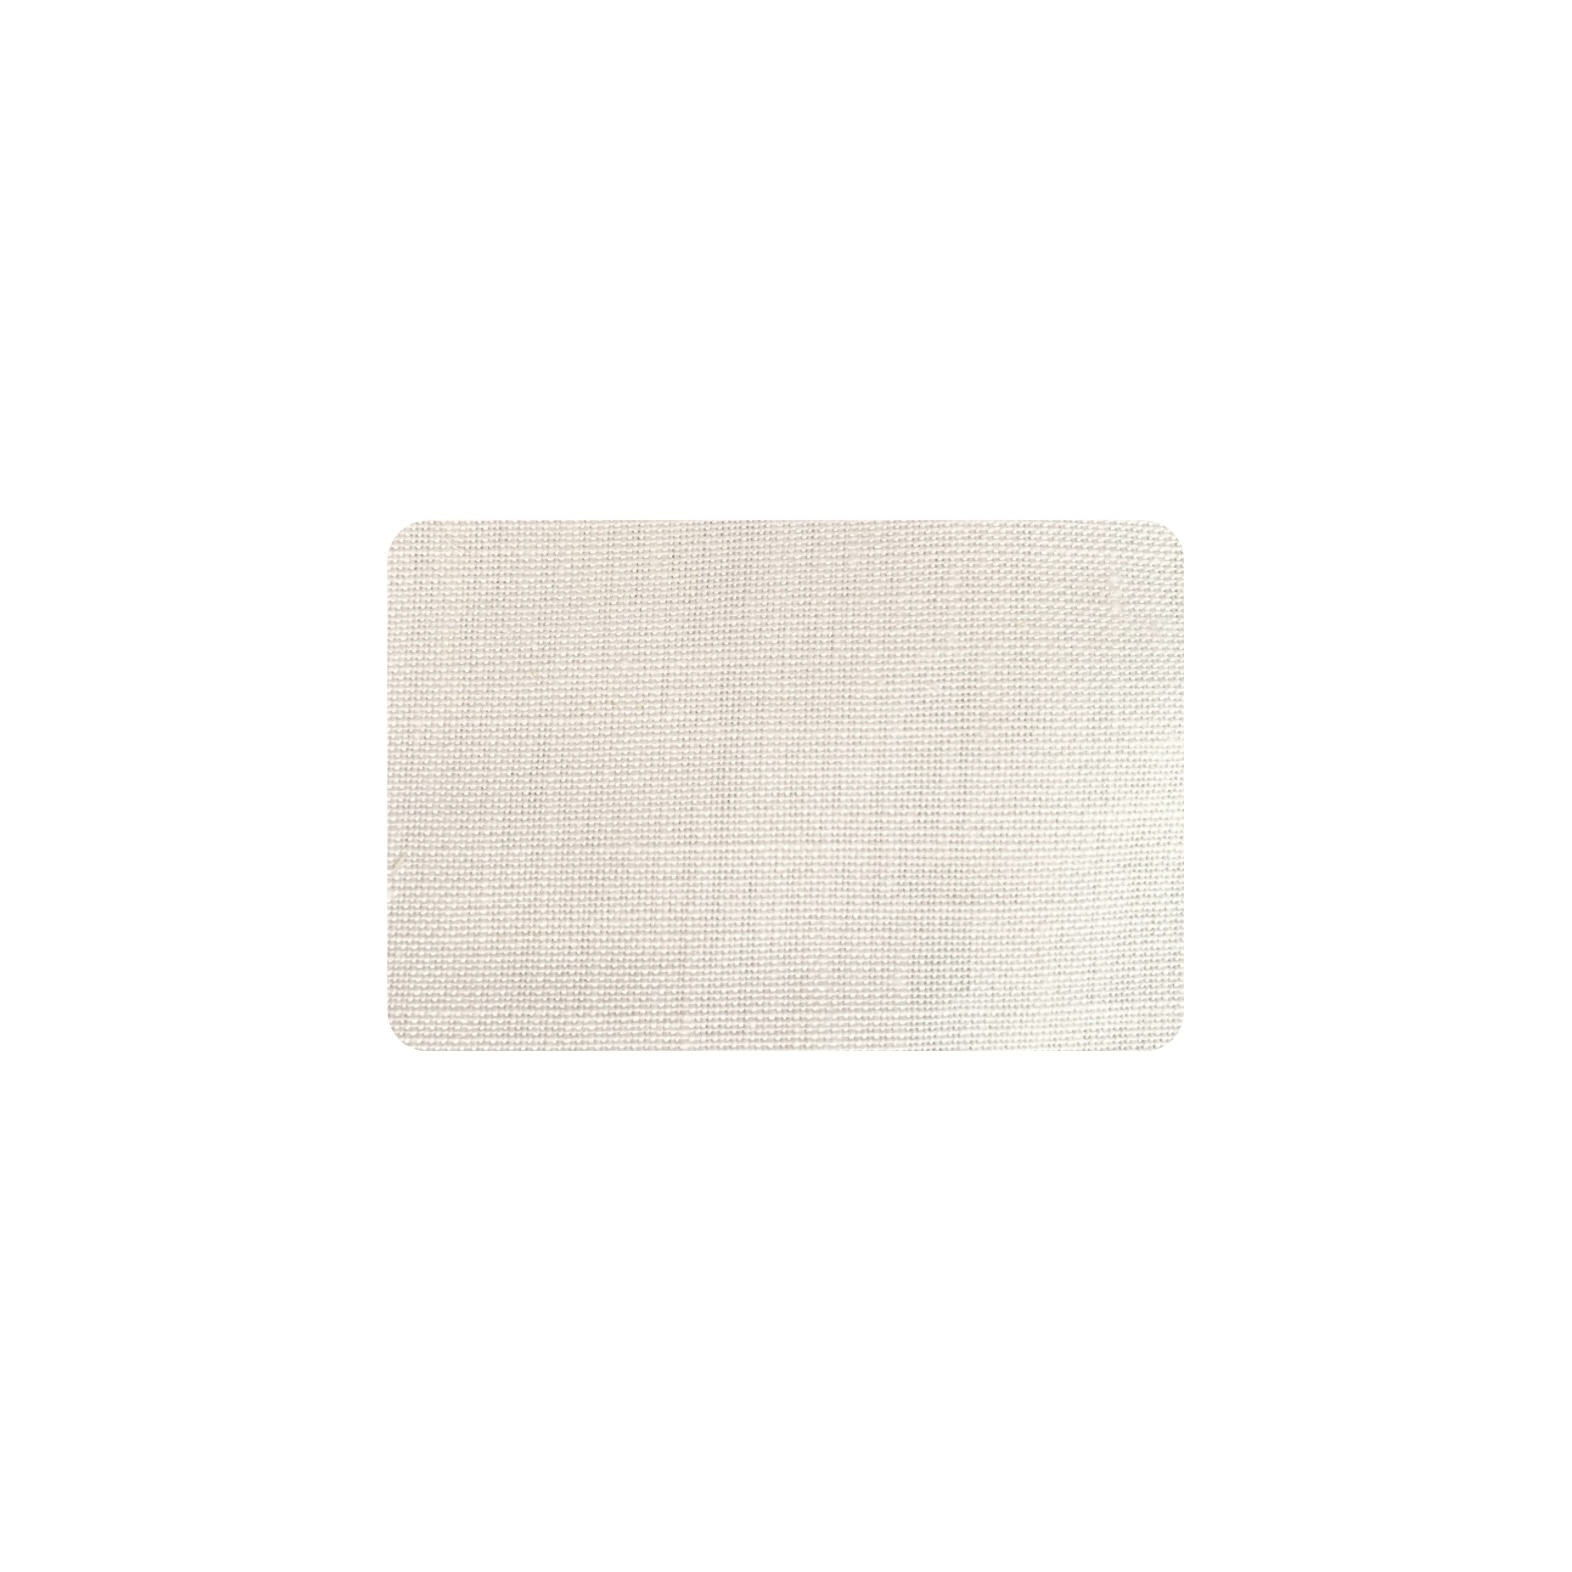 Rectangular off-white linen tablecloth 248x358 cm.